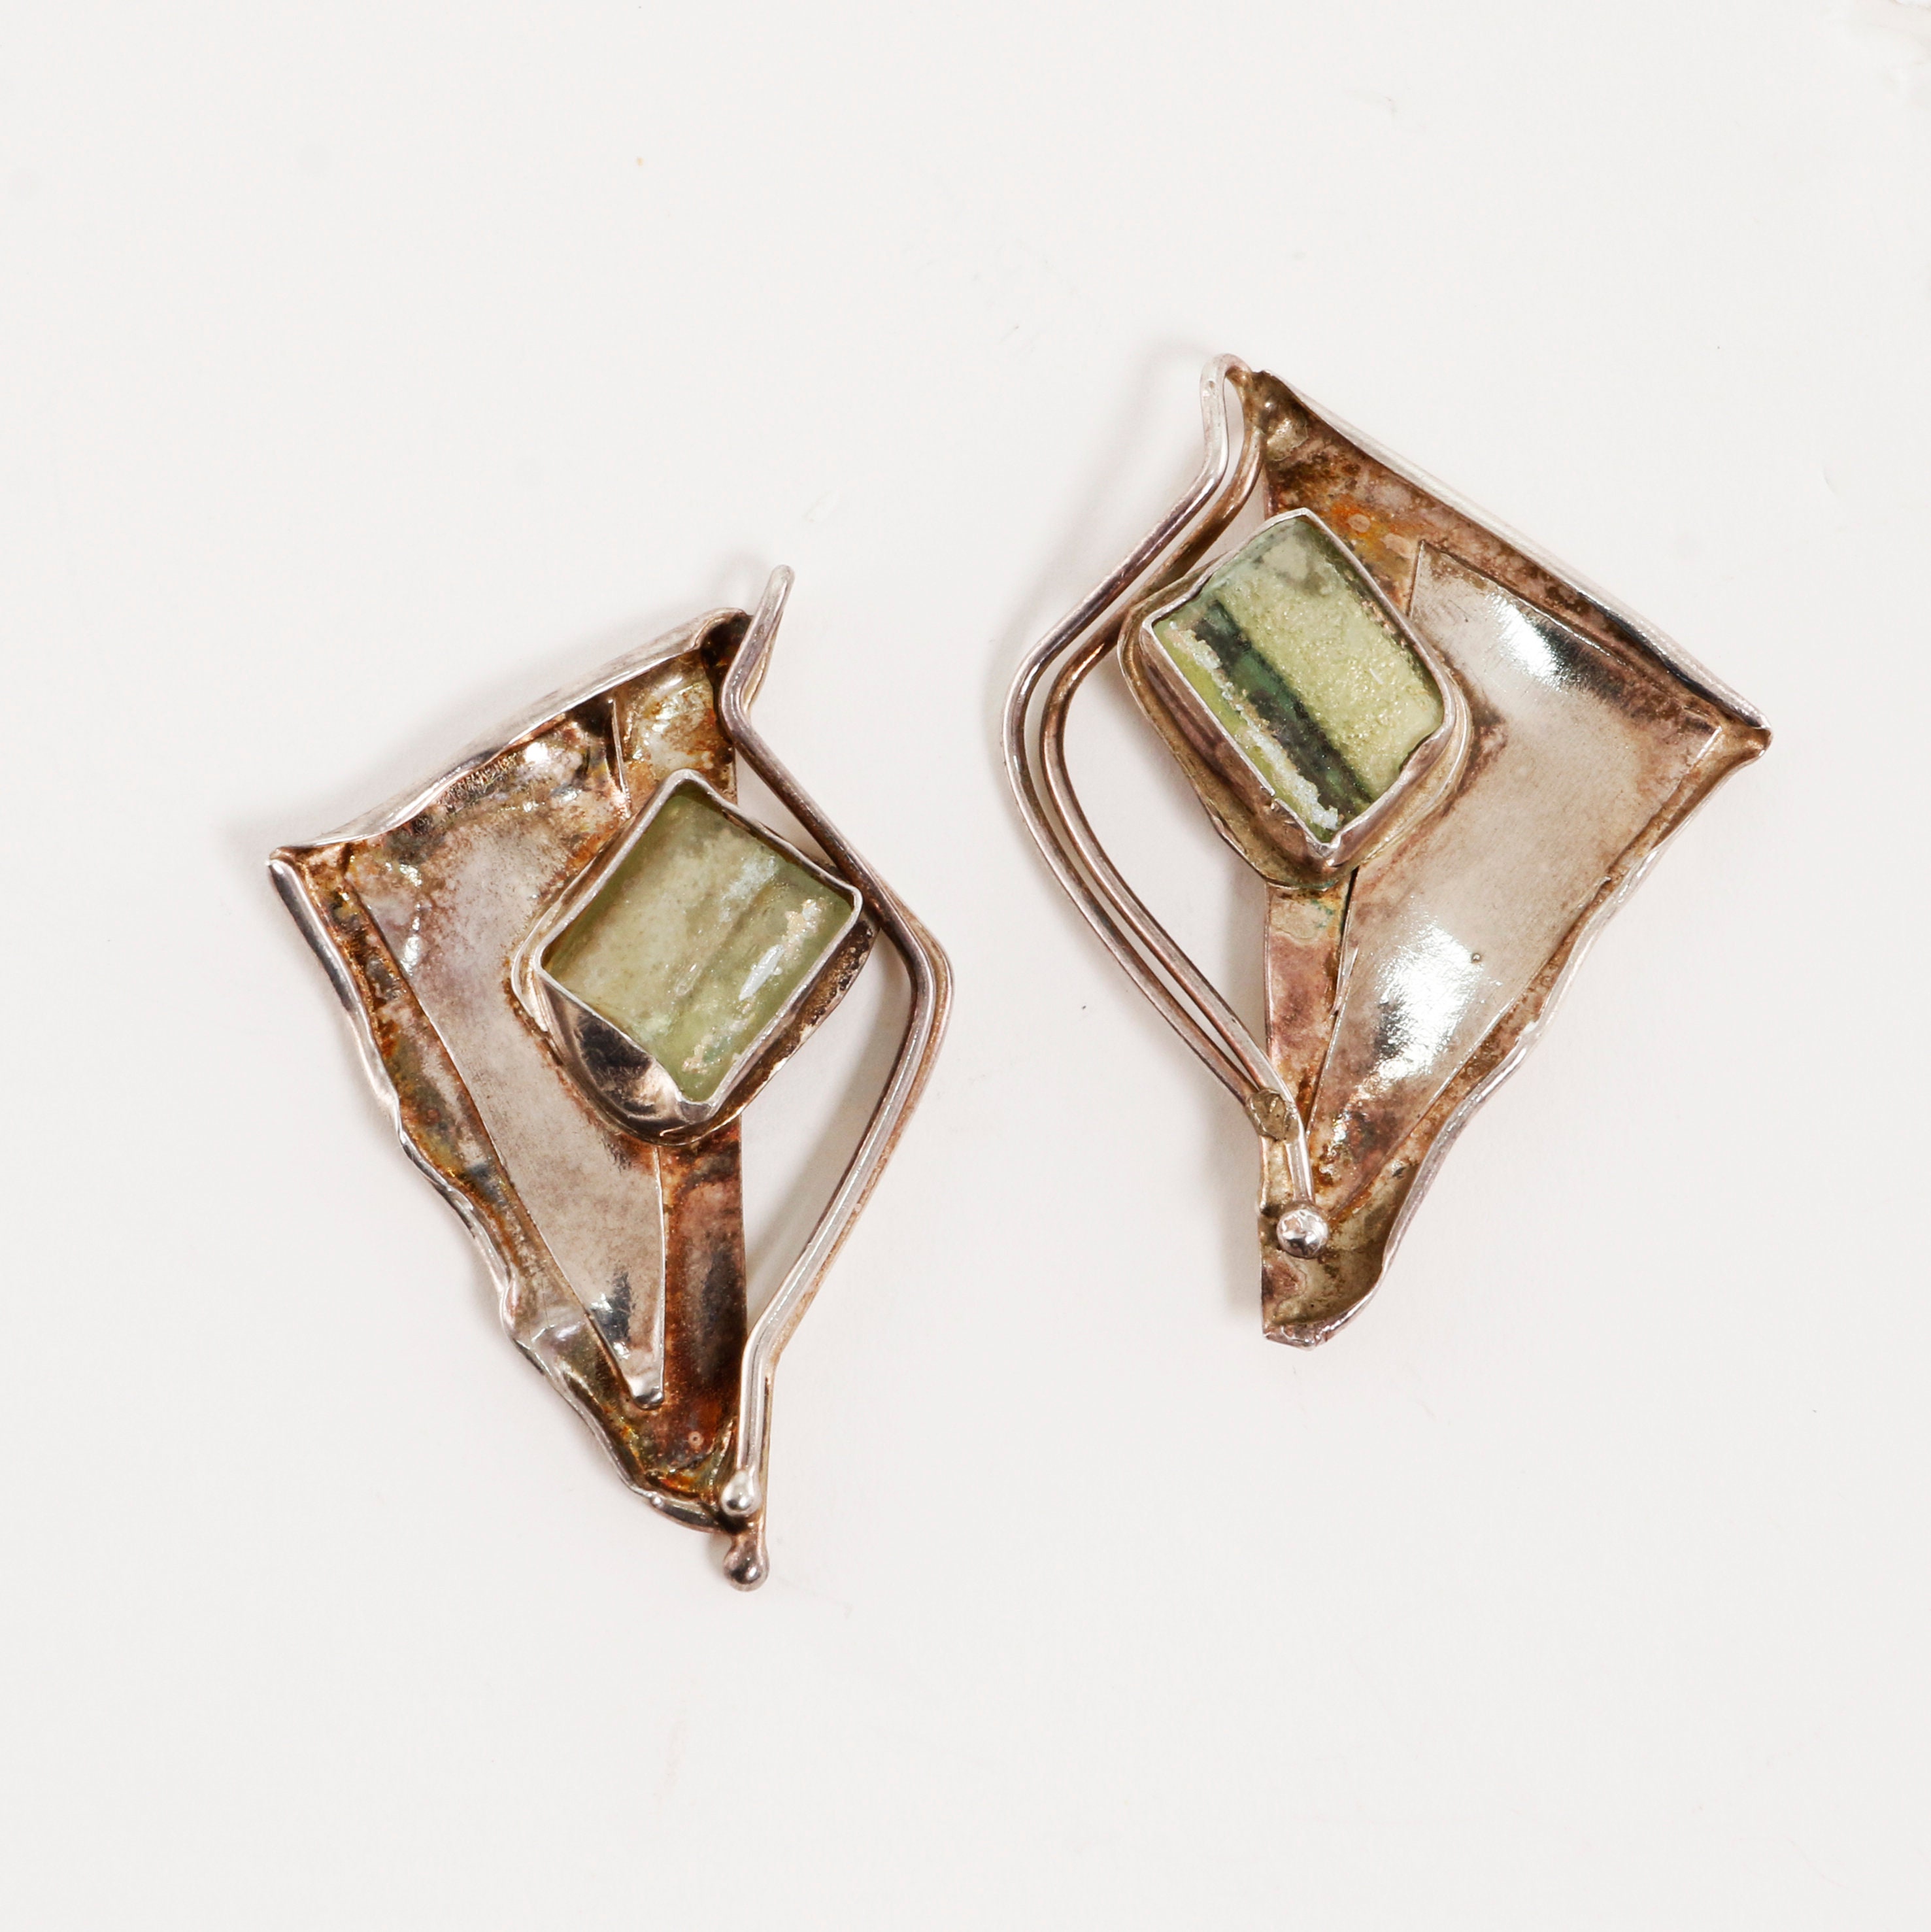  Yheakne Vintage Triangle Crystal Dangle Earrings